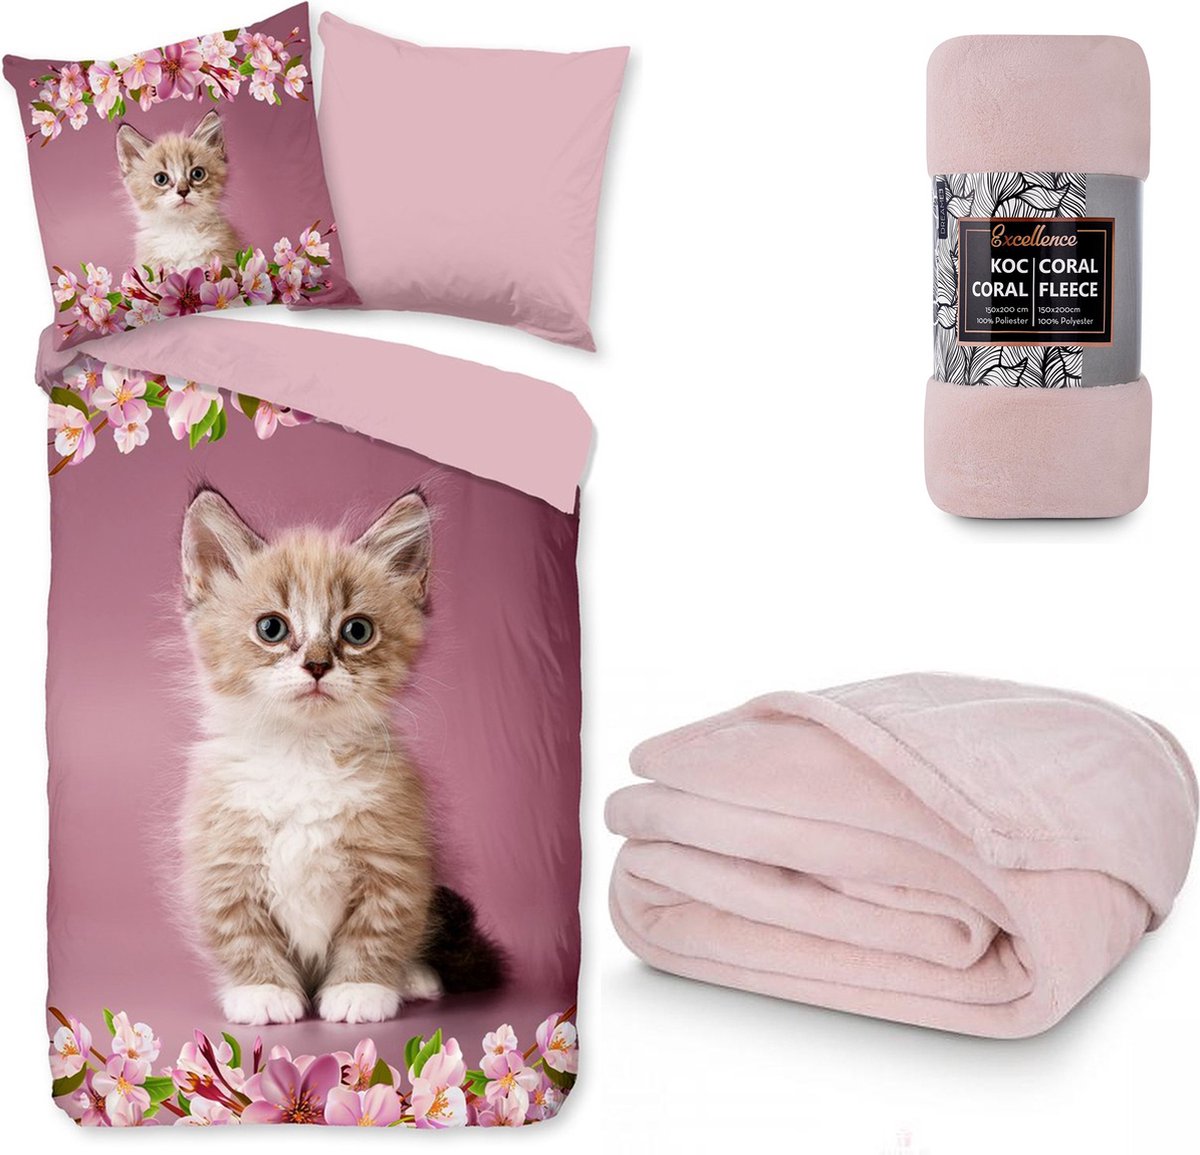 Dekbedovertrek Poes- Kitten- roze- bloemen- 140x200/220- Katoen- incl. oudroze fleece deken 150x200cm- zacht en extra warm!